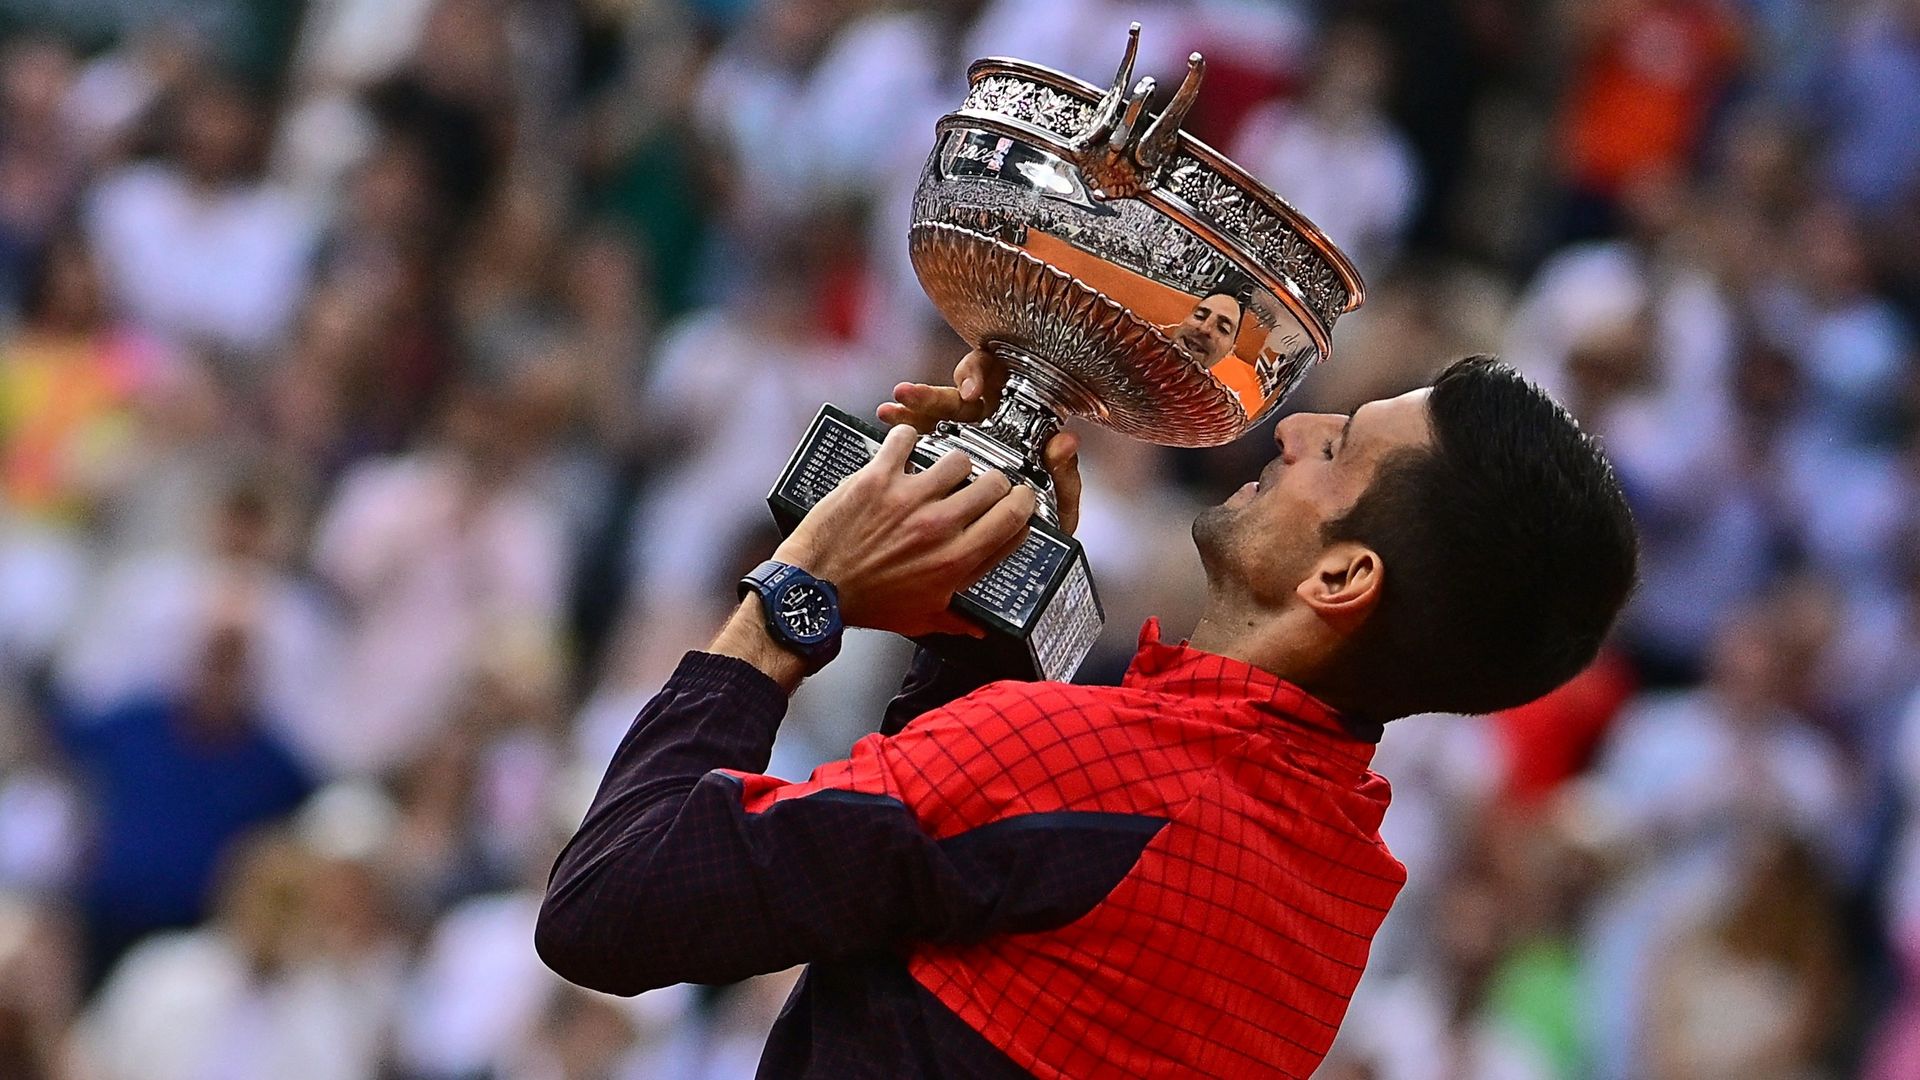 Roland-Garros : Novak Djokovic bat Casper Ruud en finale et remporte son  23e titre du Grand Chelem, un record - France Bleu